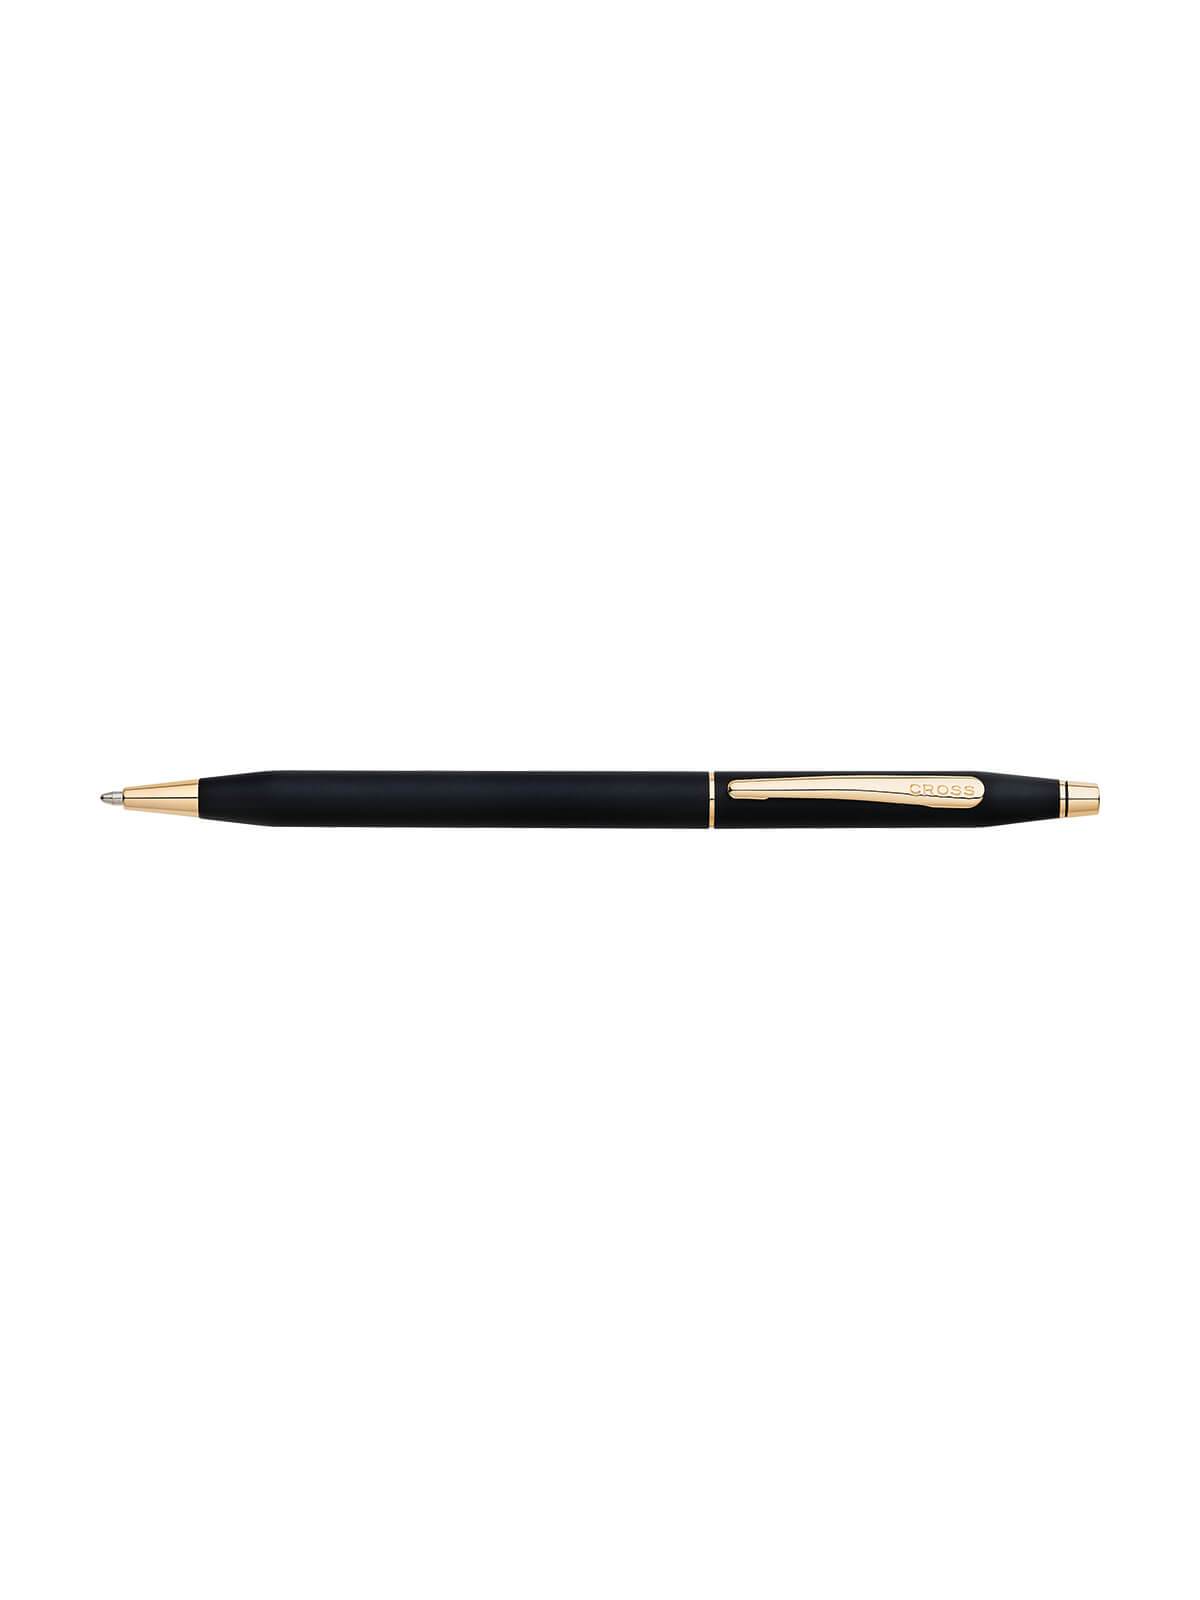 Cross Classic Century Classic Black Ballpoint Pen 2502